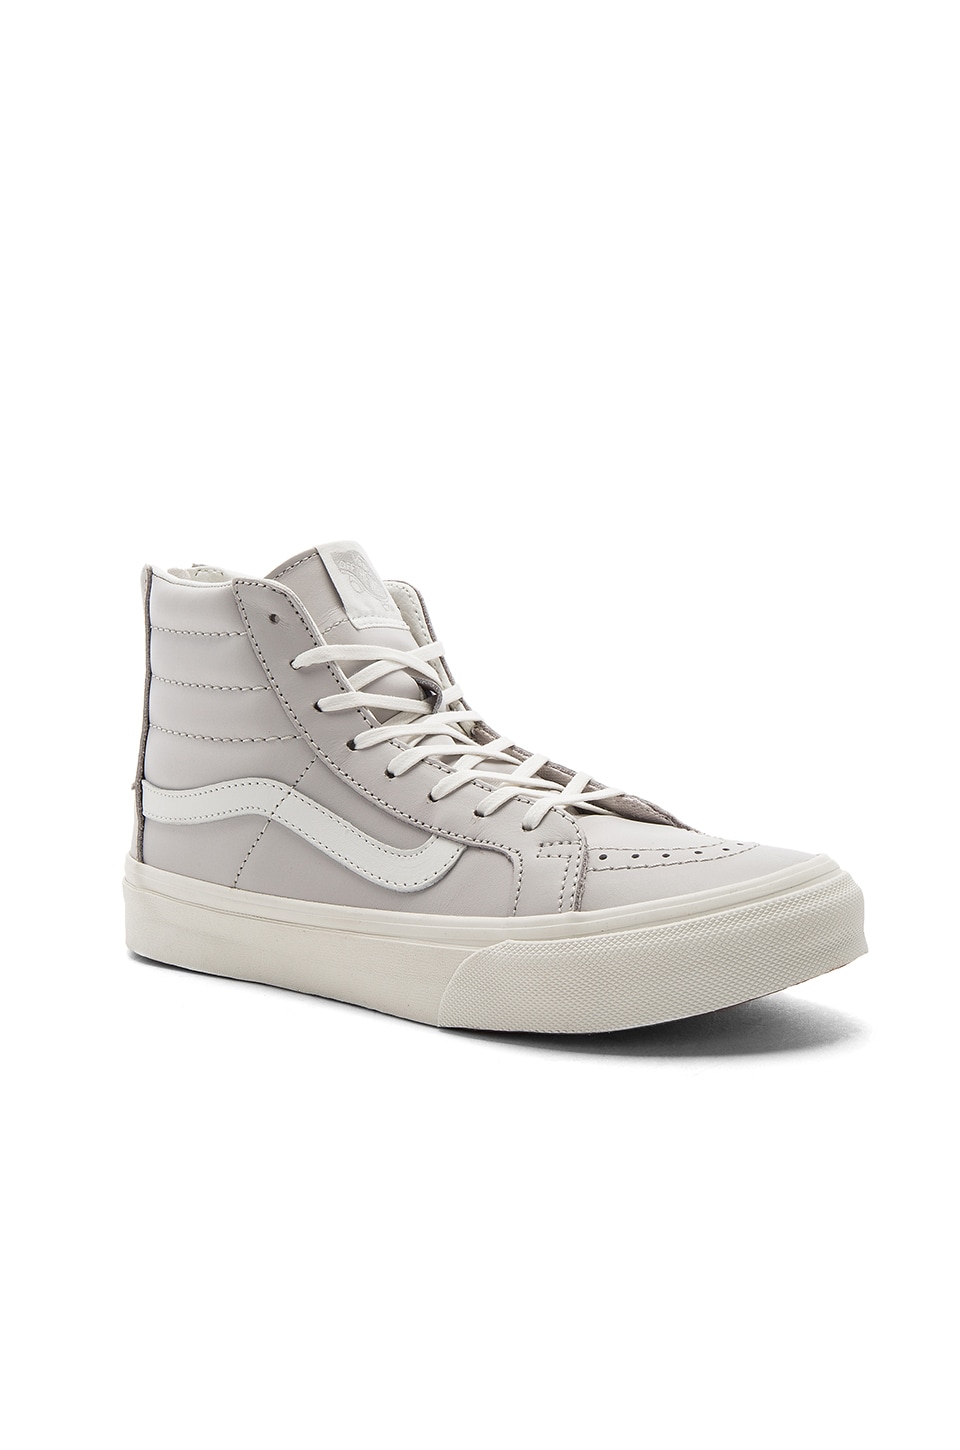 Vans SK8-Hi Slim Zip Sneaker in Chime & Blanc De Blanc | REVOLVE